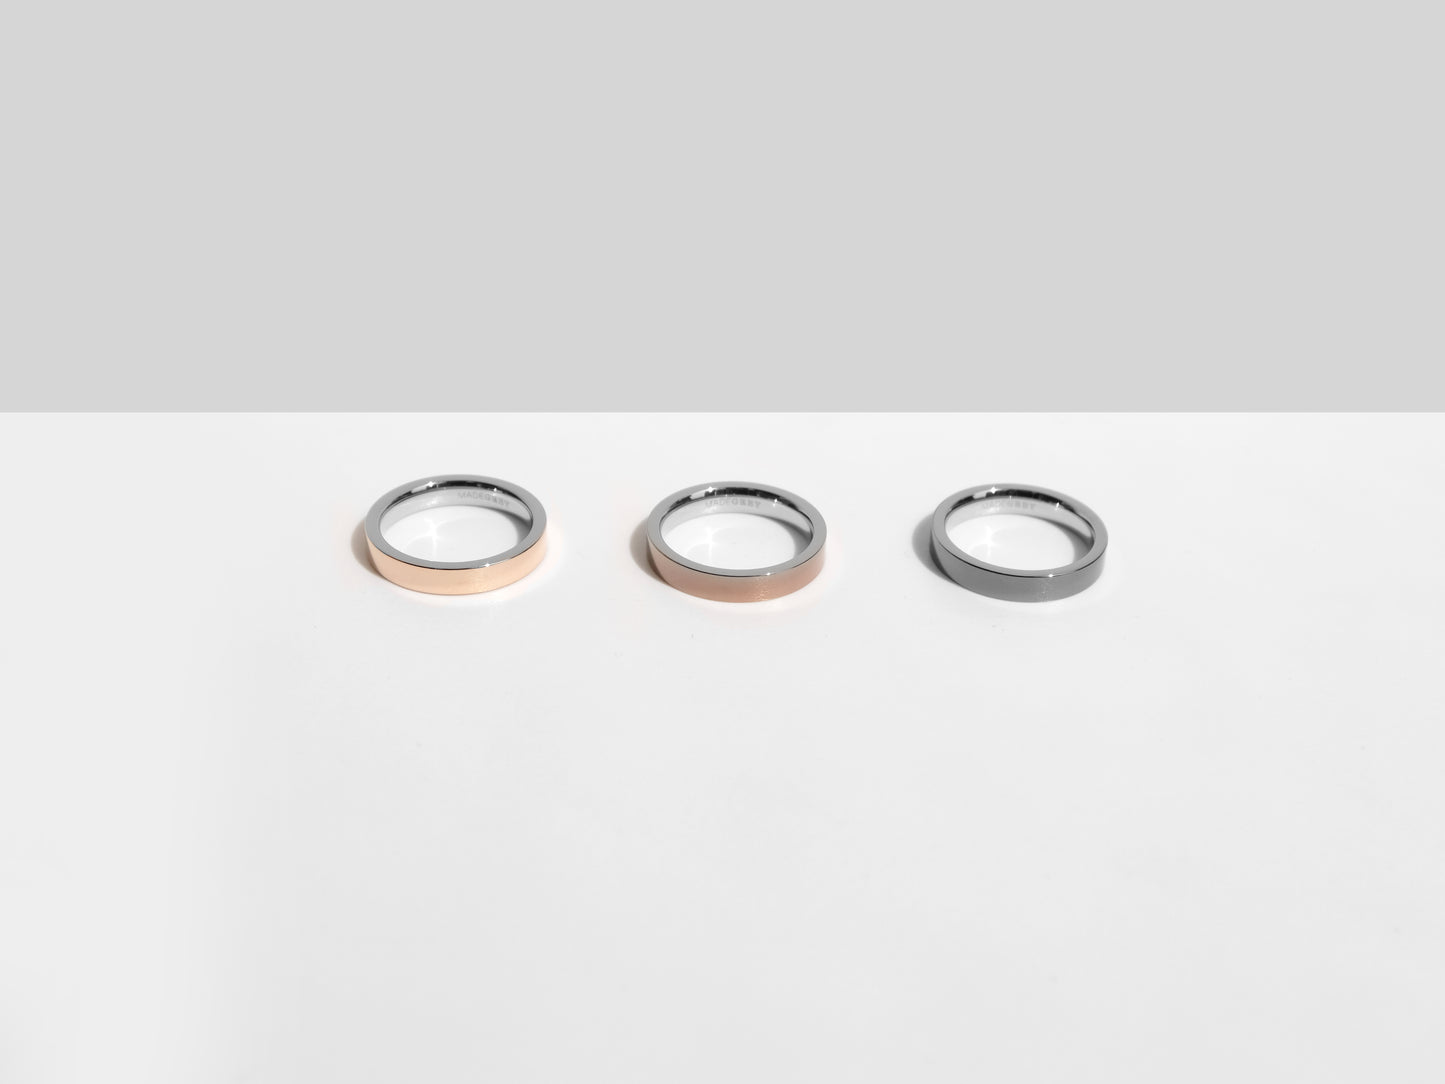 The Minimalist Rings